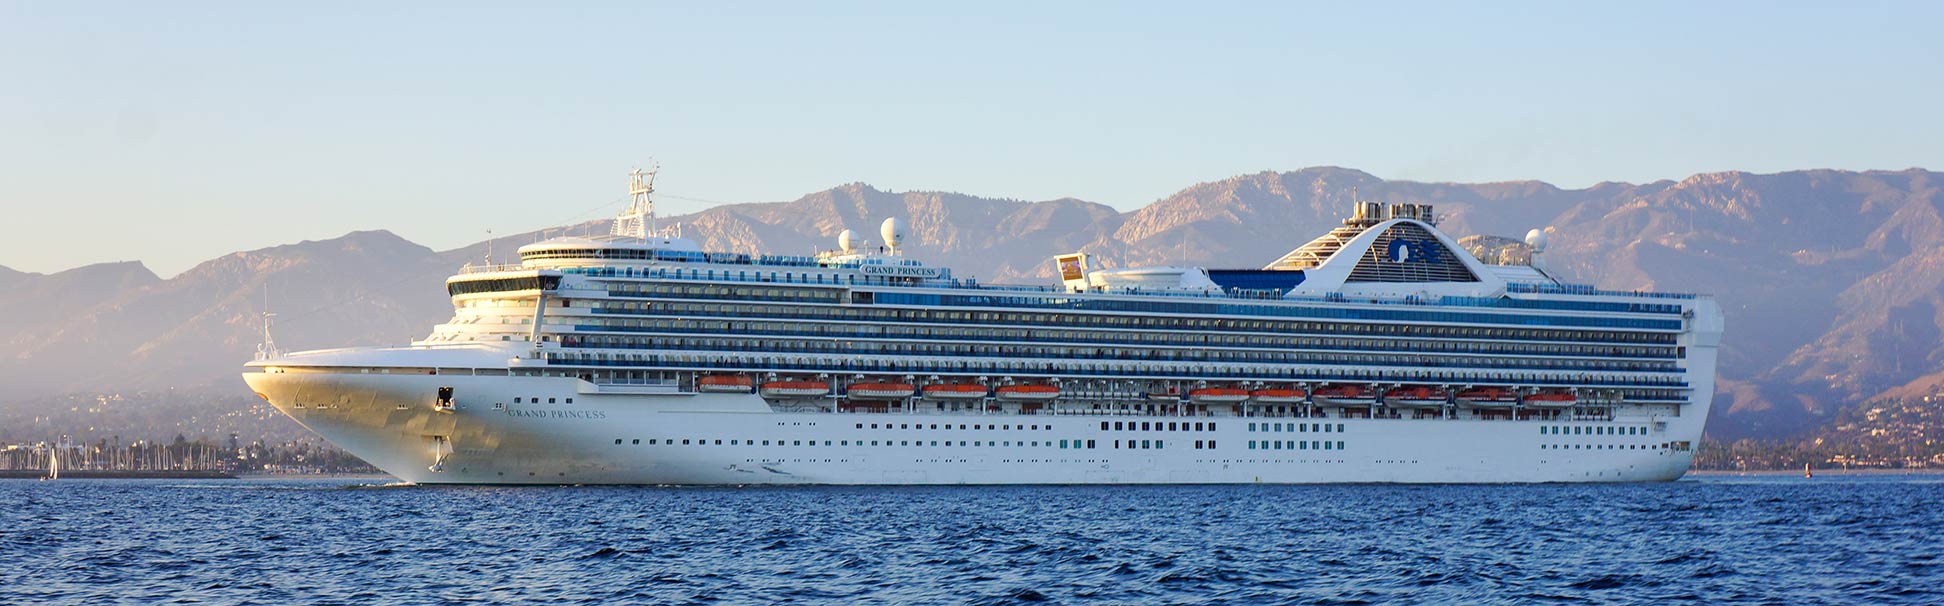 Cruise Ship Grand Princess in California